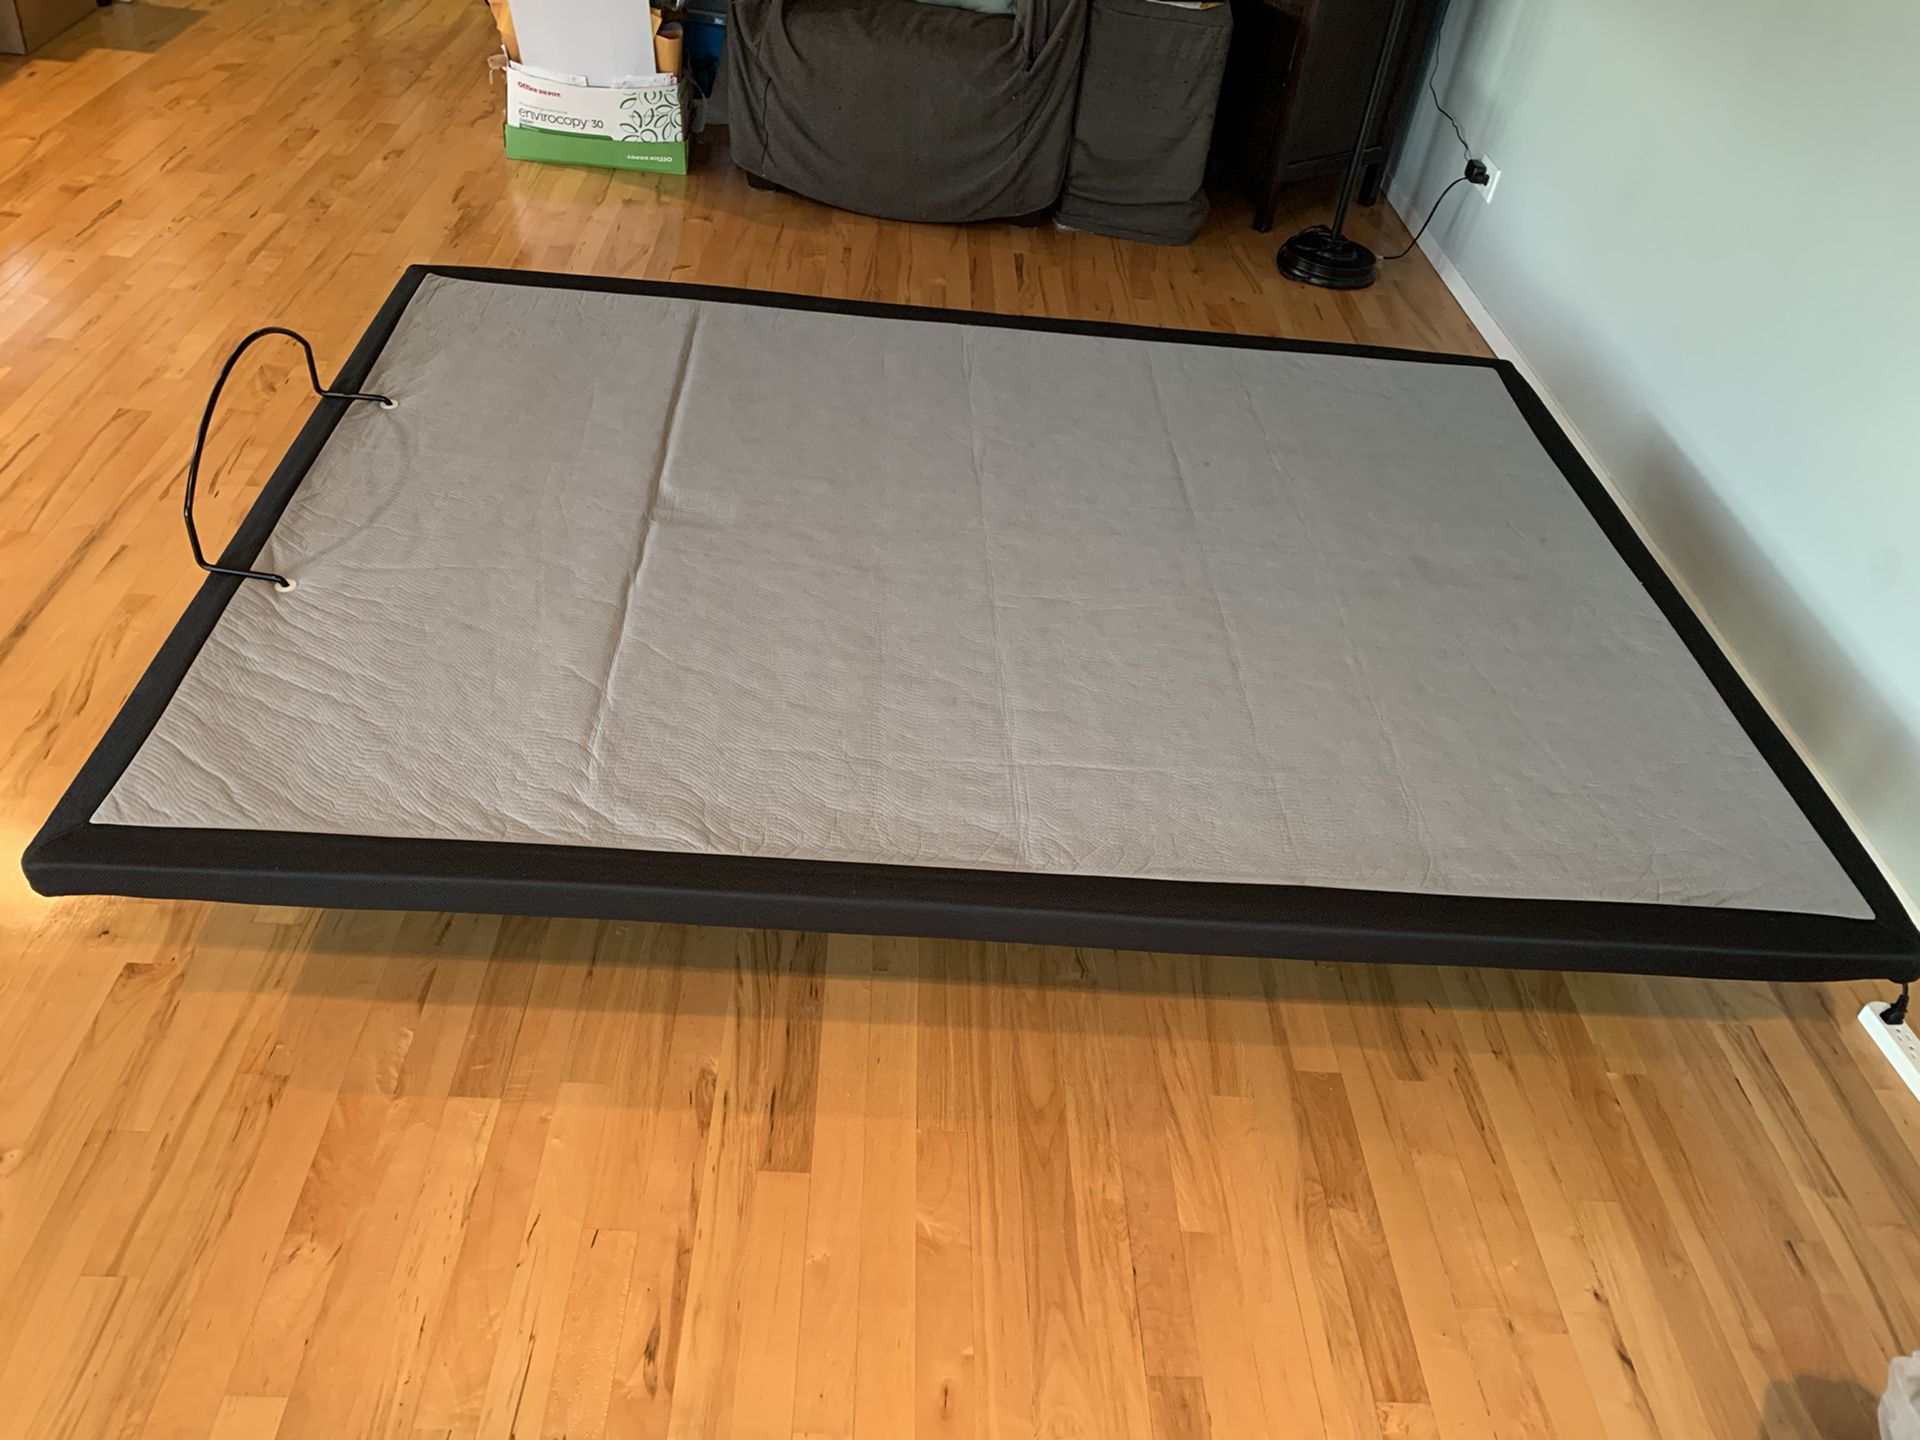 mattress firm 300 adjustable base instructions